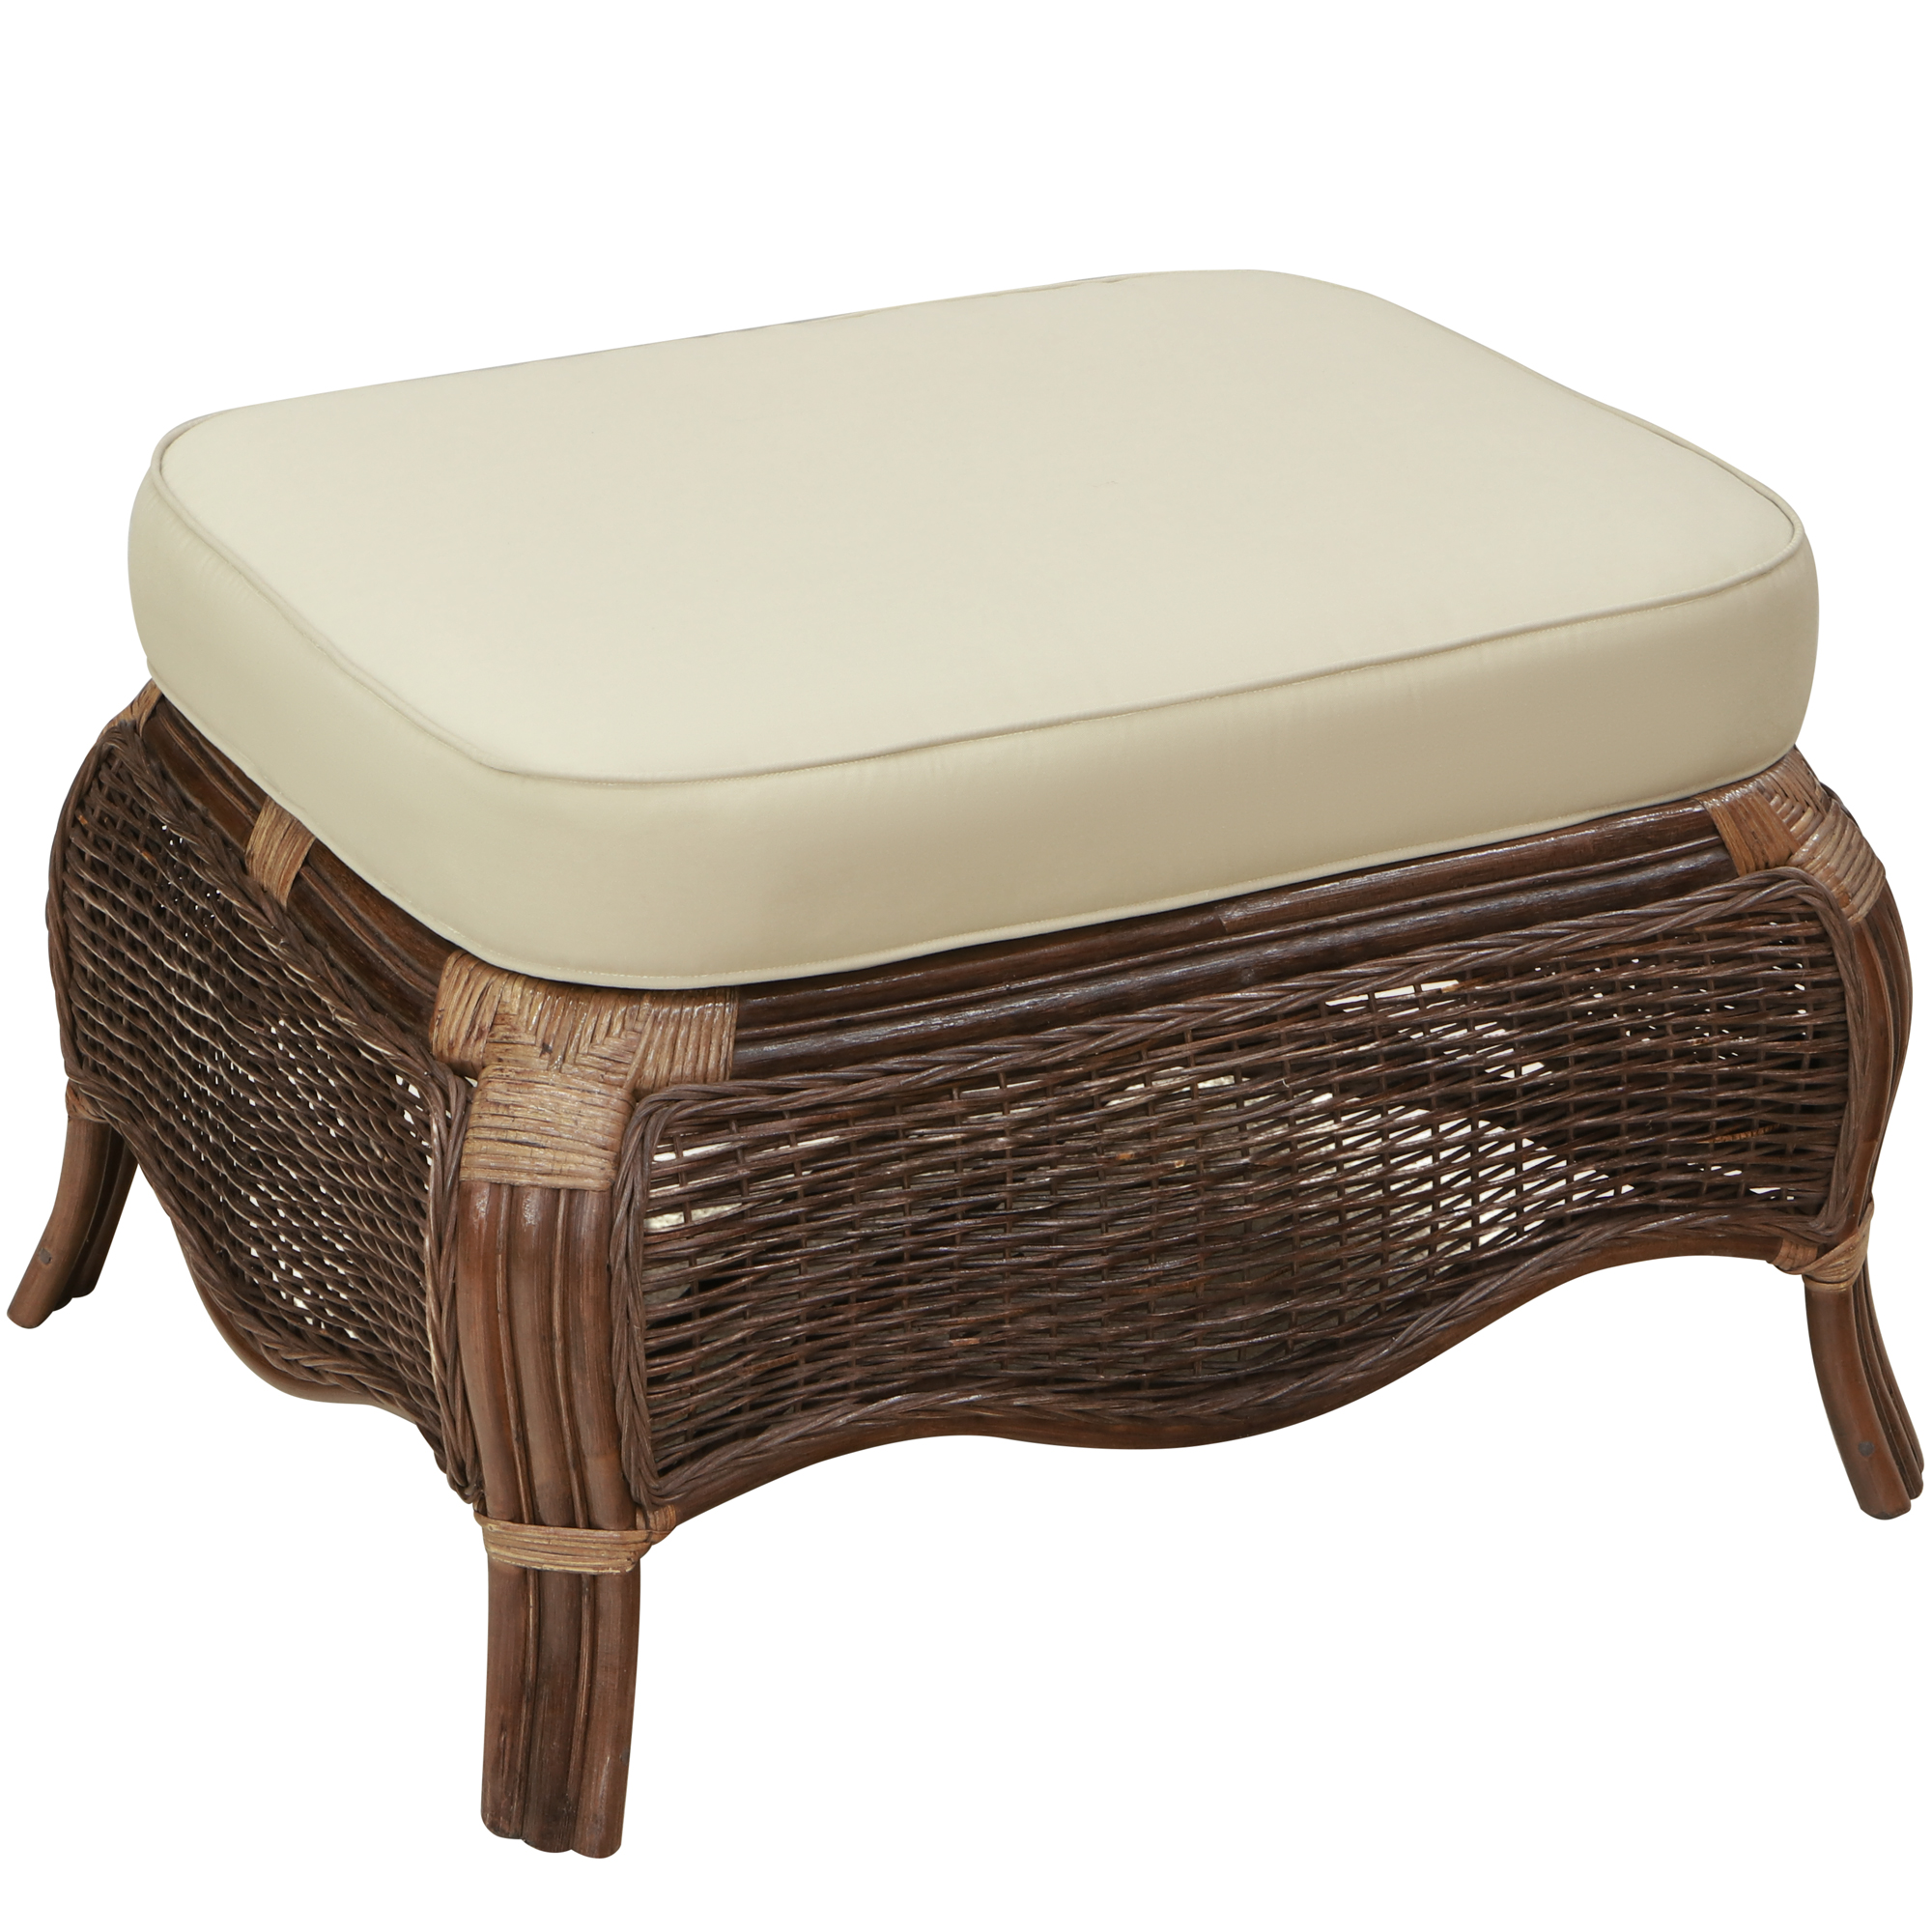 фото Комплект мебели rattan grand manchester medium brown с подушками 5 предметов